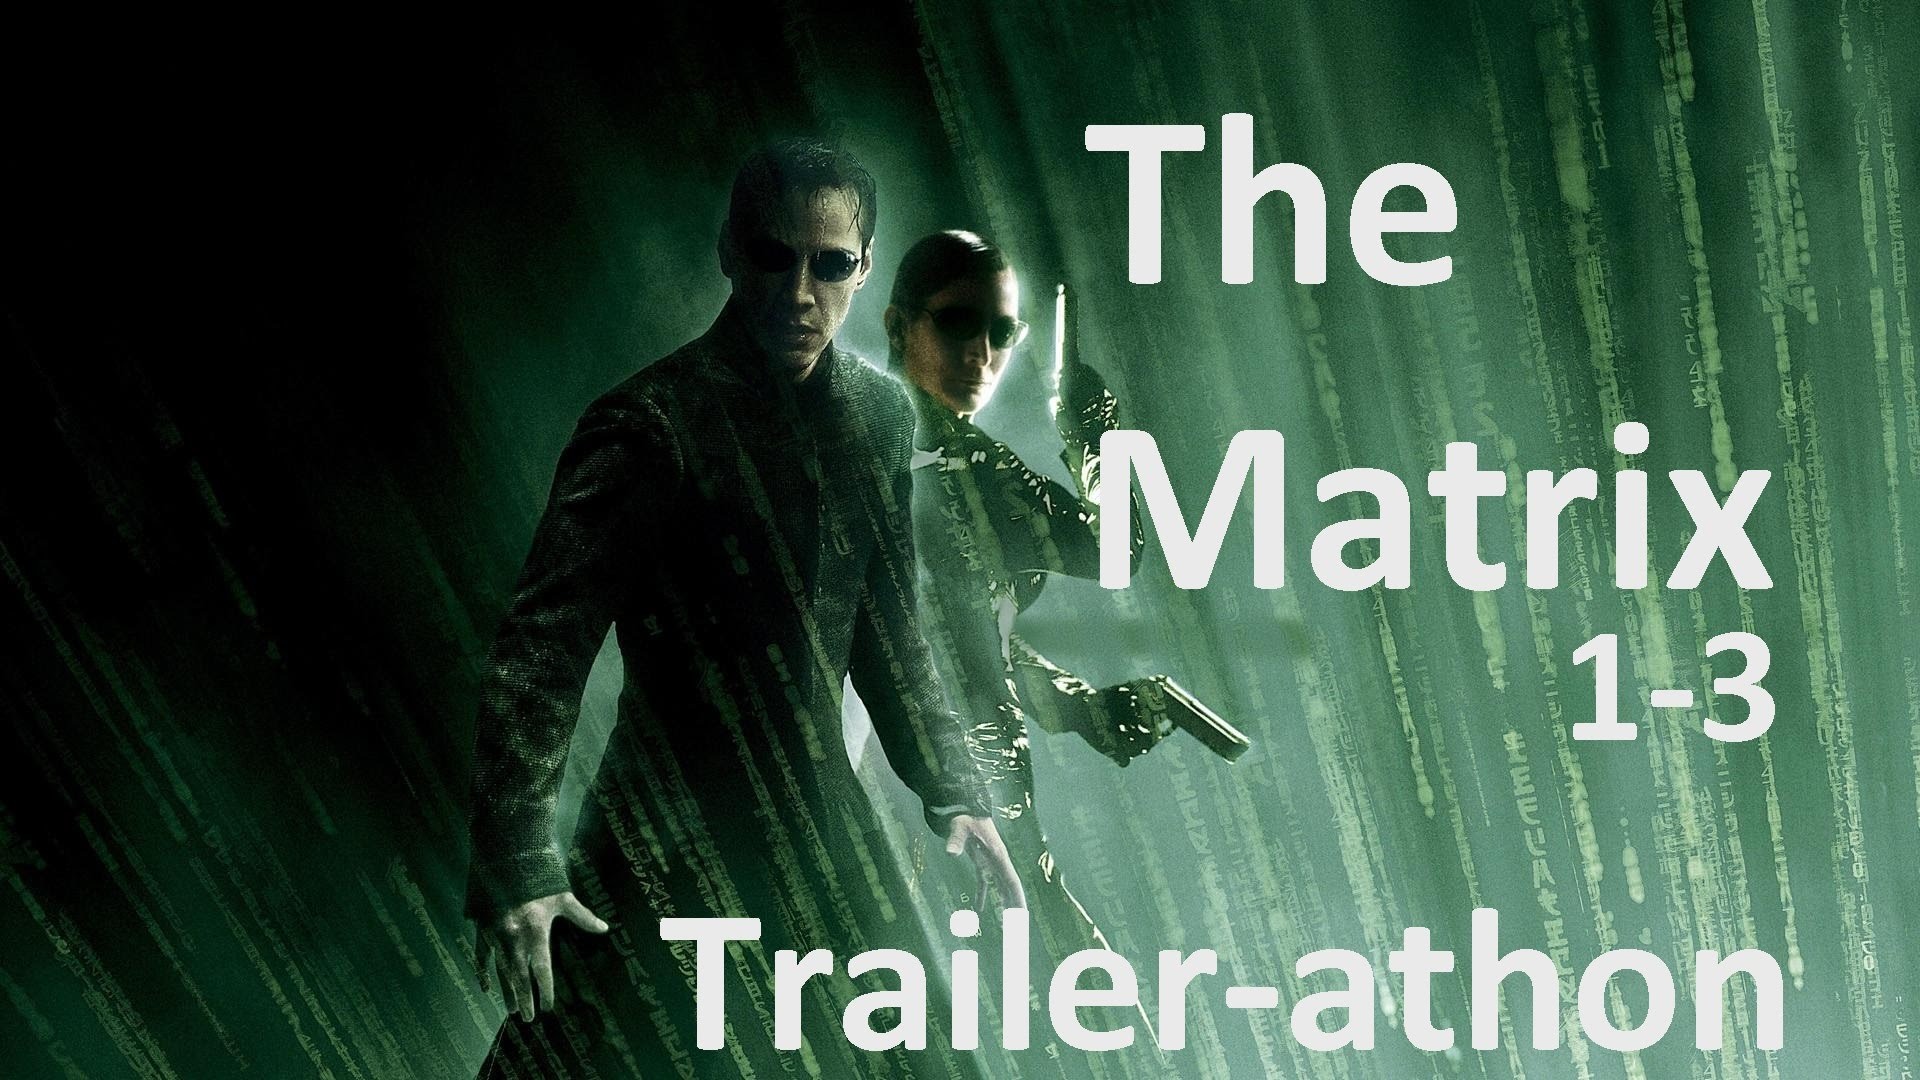 1920x1080 The Matrix trilogy trailers (Trailer-athon Series) HD Keanu Reeves - YouTube